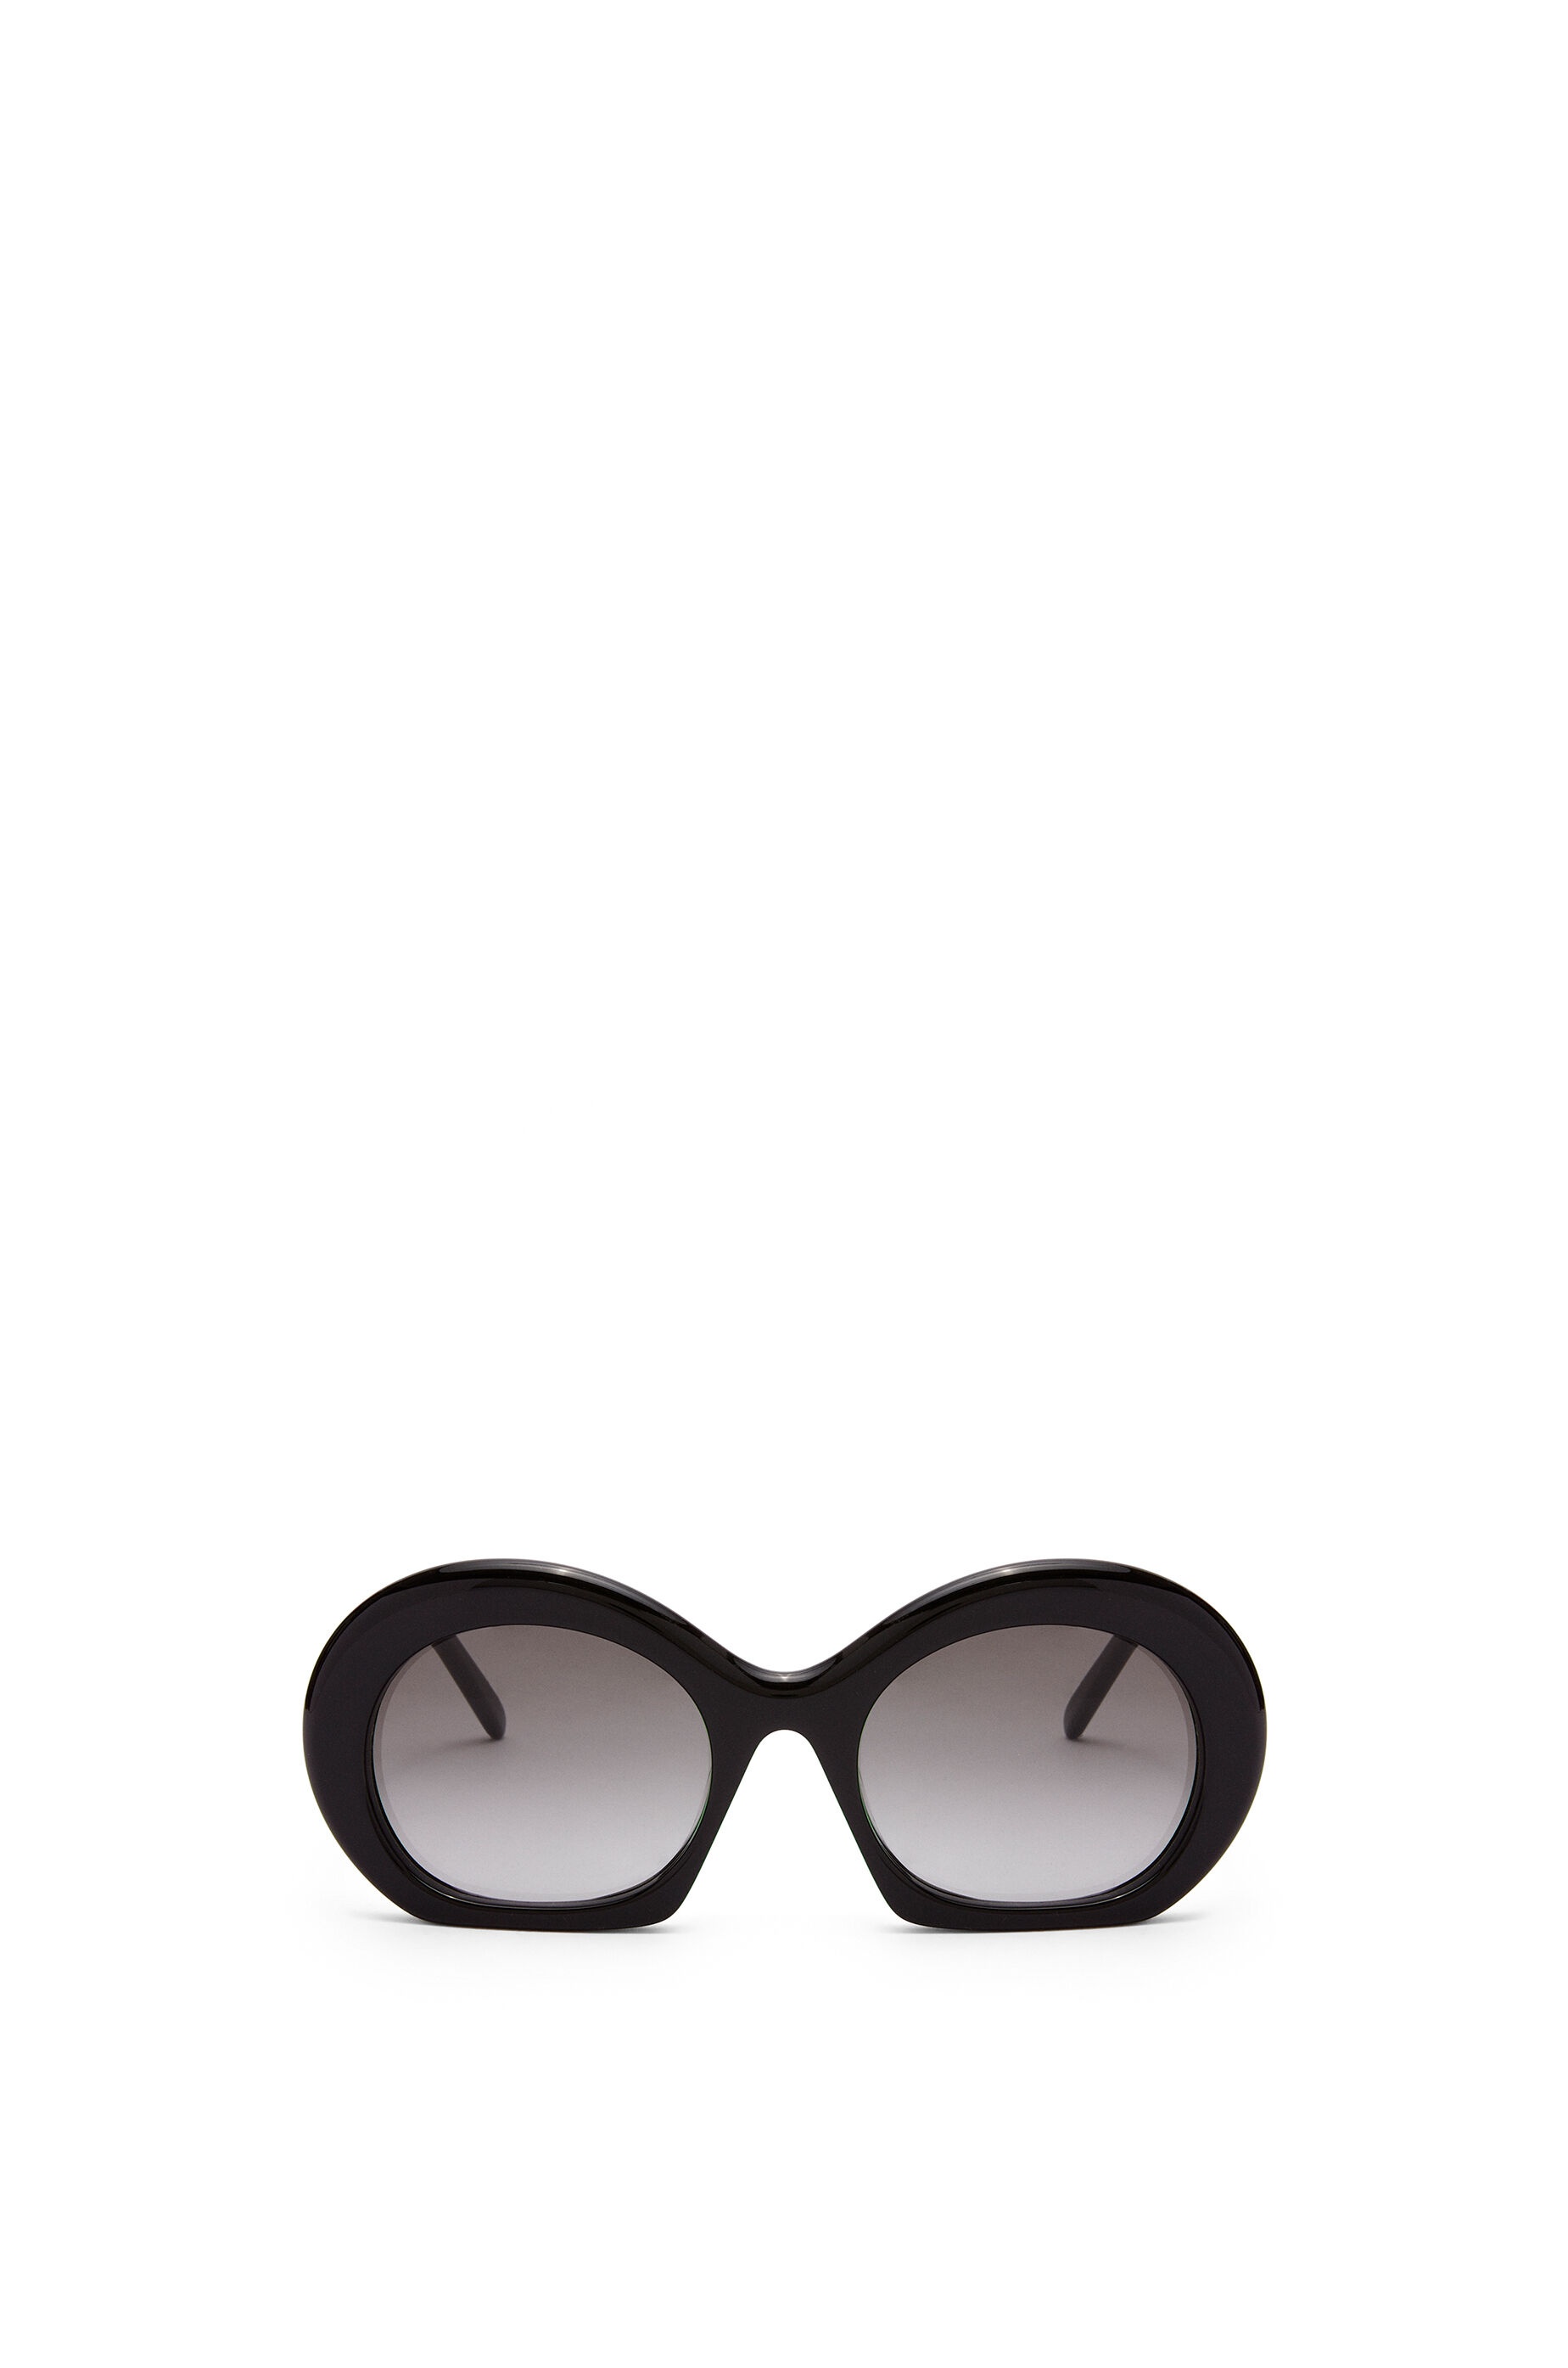 Loewe Half moon sunglasses in acetate | REVERSIBLE